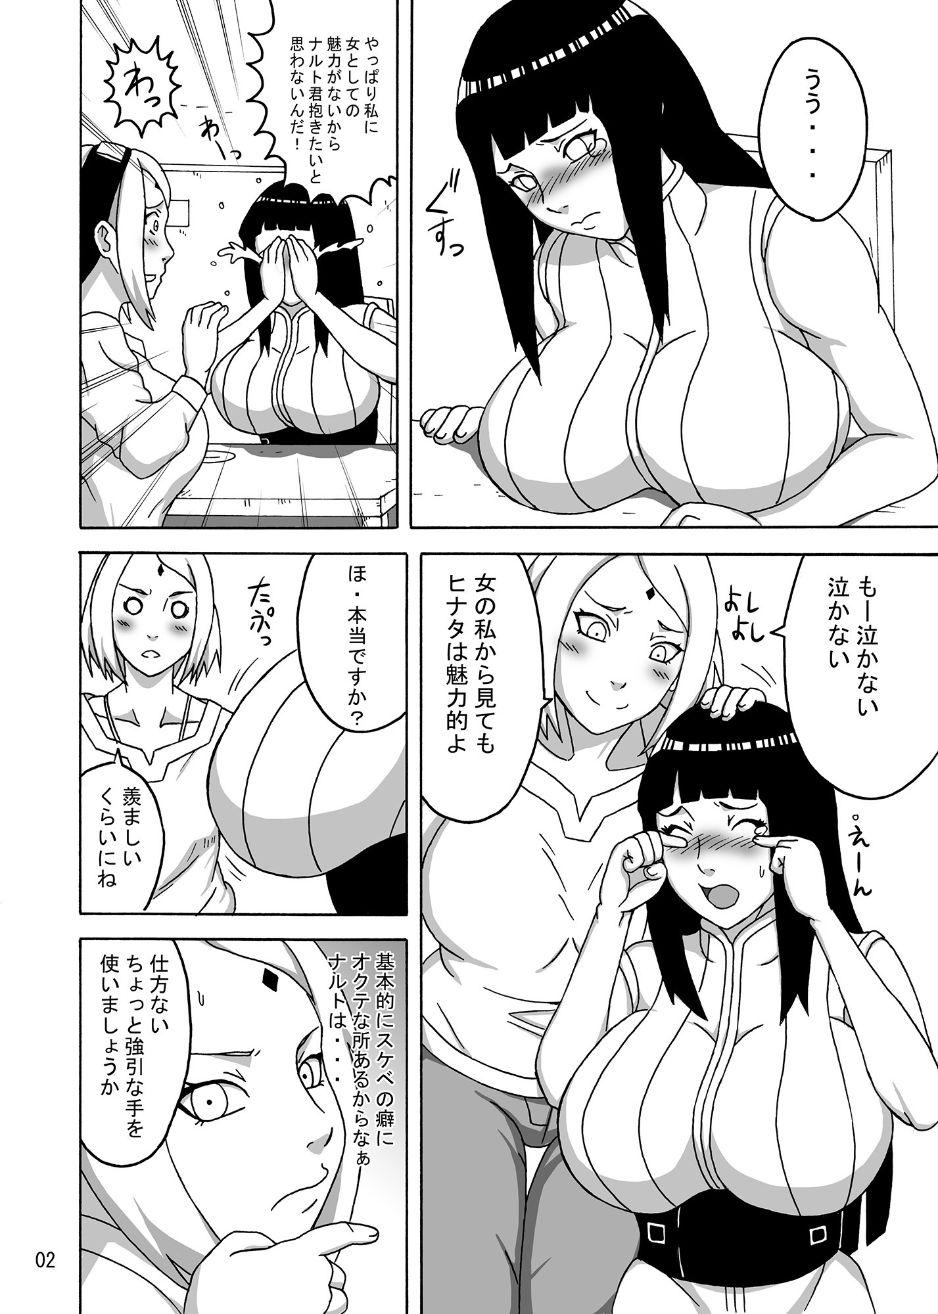 8teenxxx naruhina - Naruto Adorable - Page 5